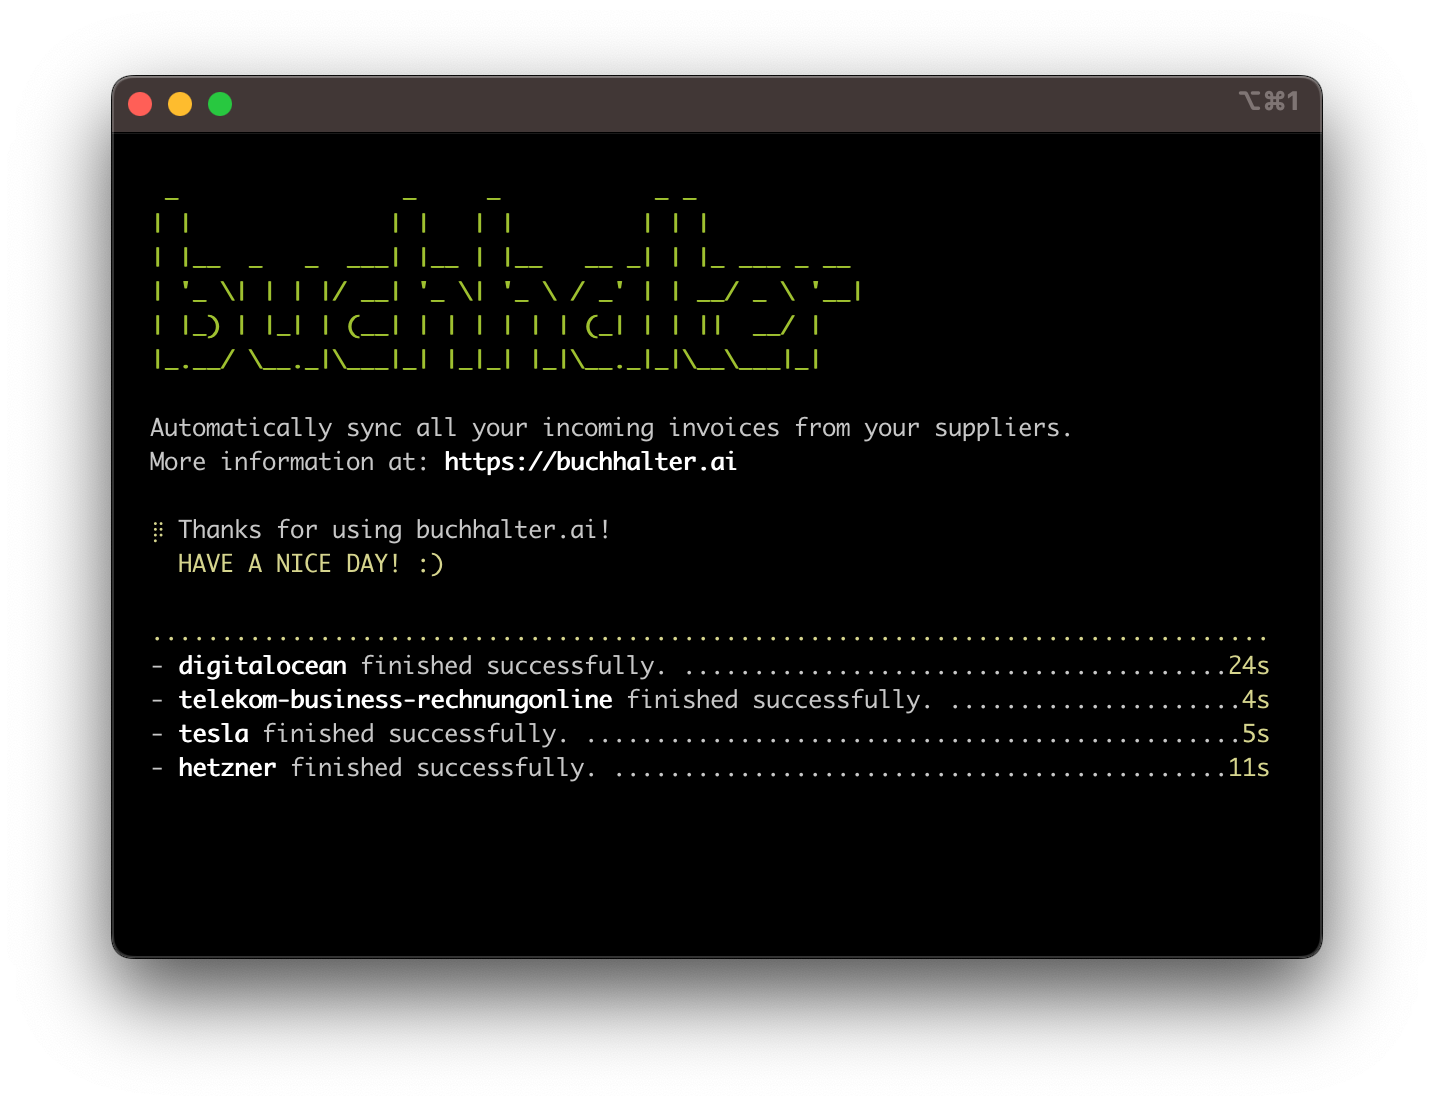 buchhalter-ai commandline tool demo screenshot